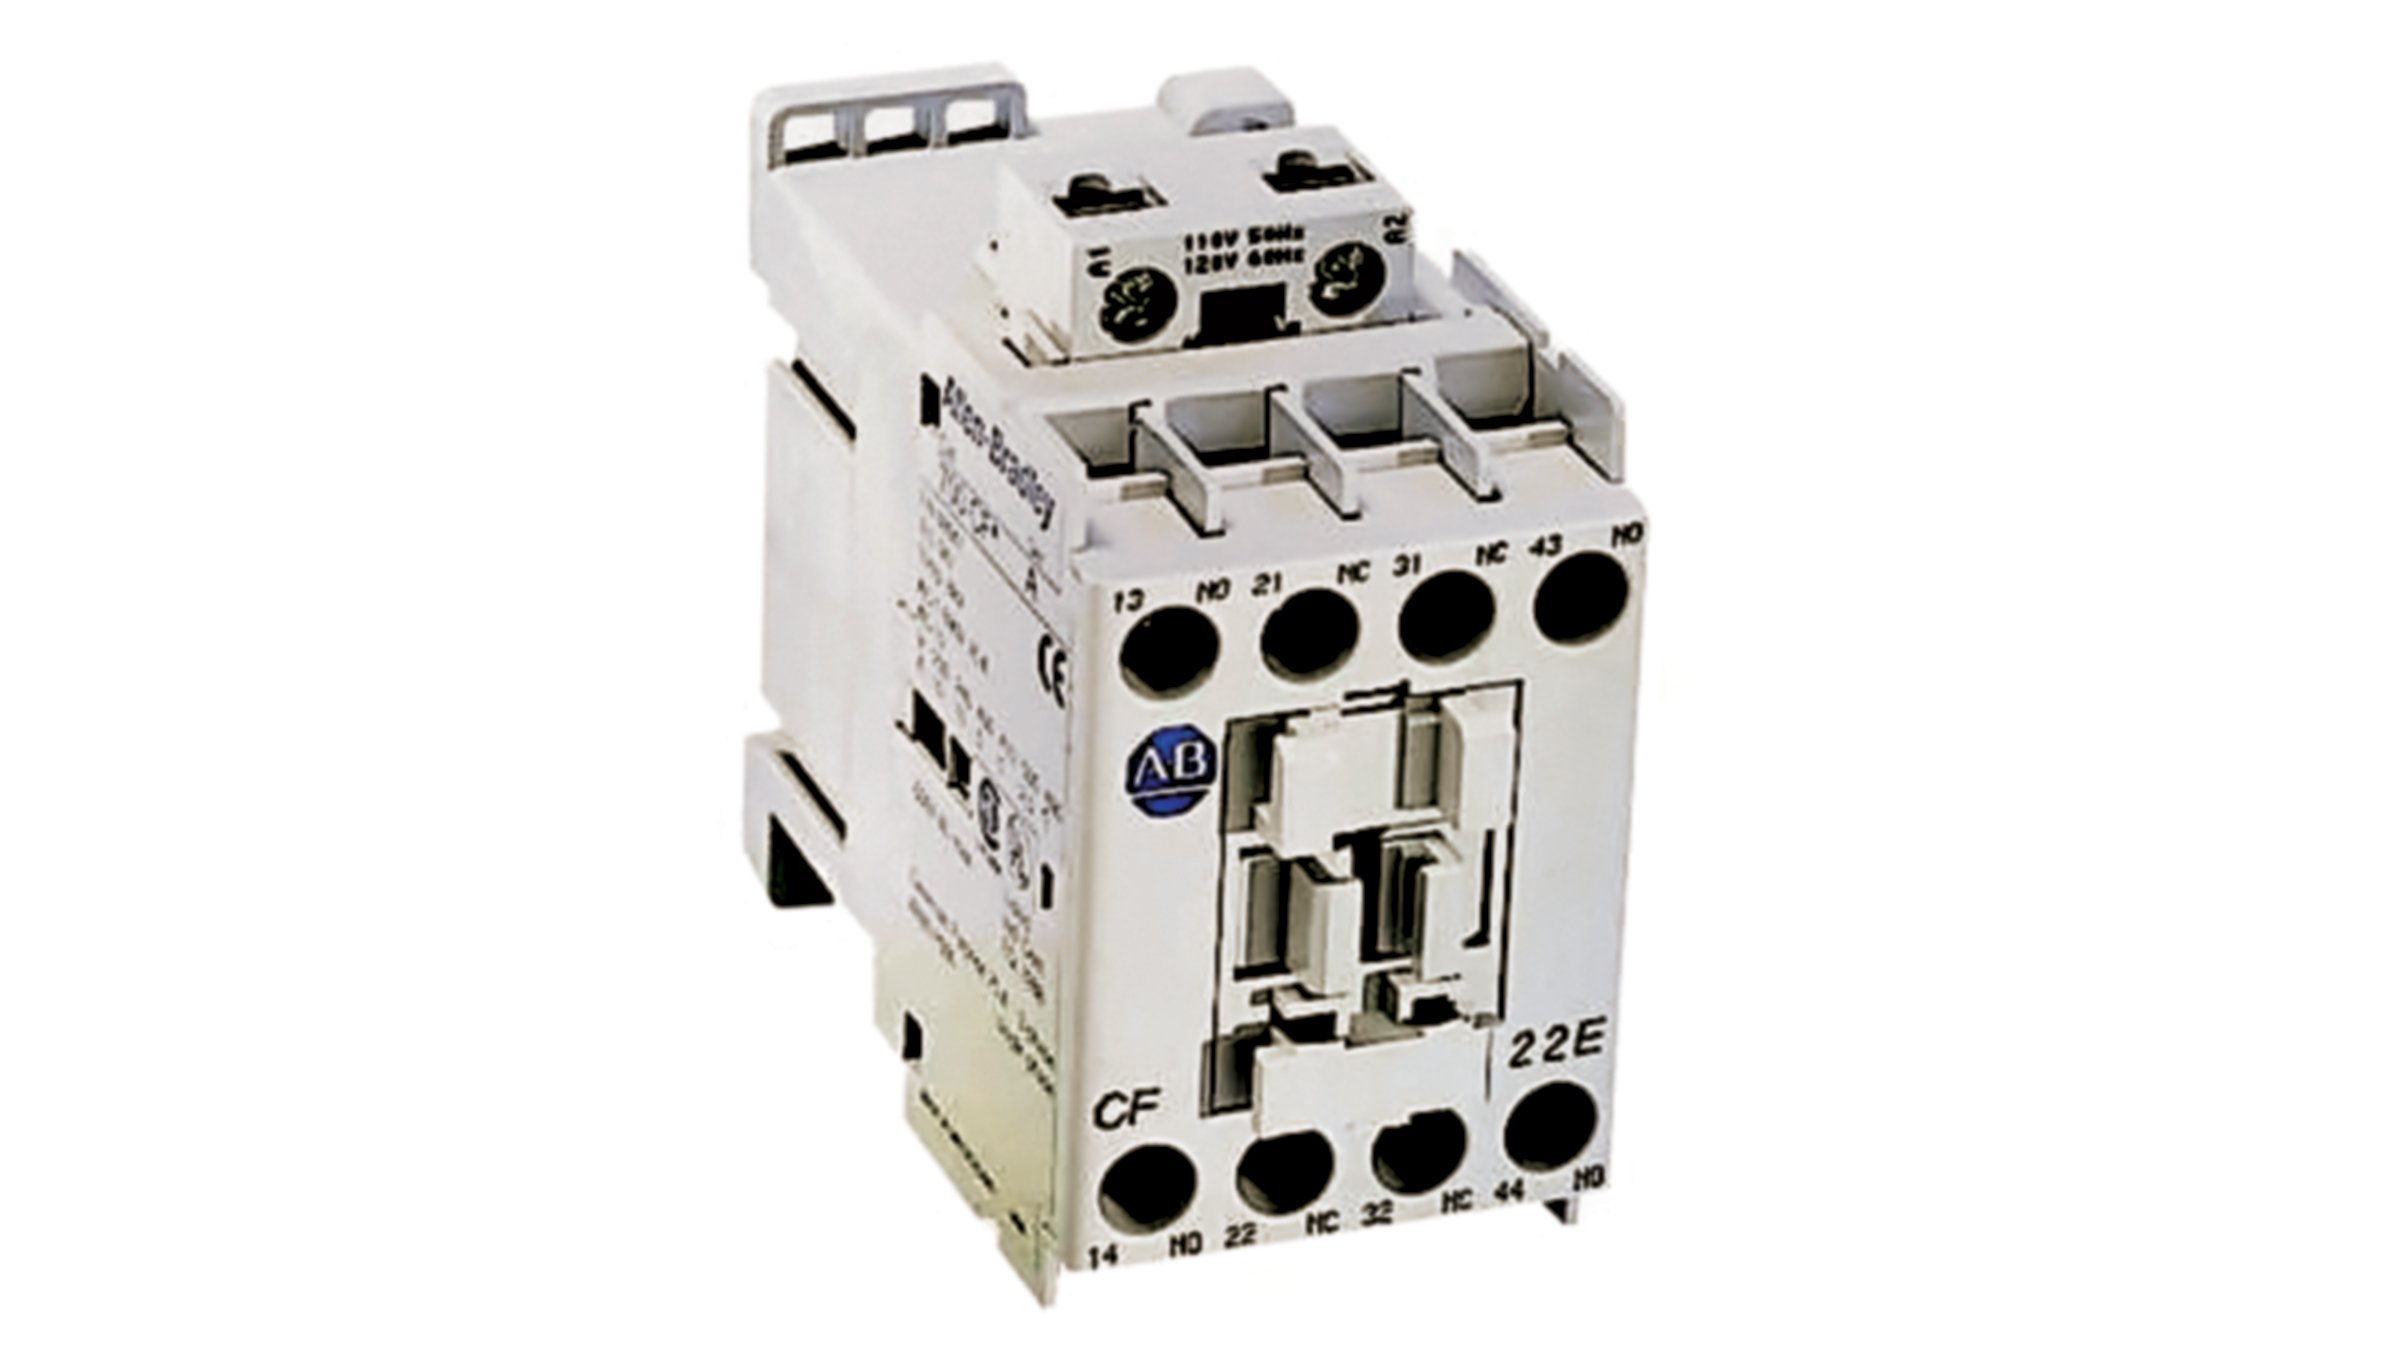 Allen-Bradley Bulletin 700-CF IEC 控制继电器提供苛刻工业型应用所需的特性。